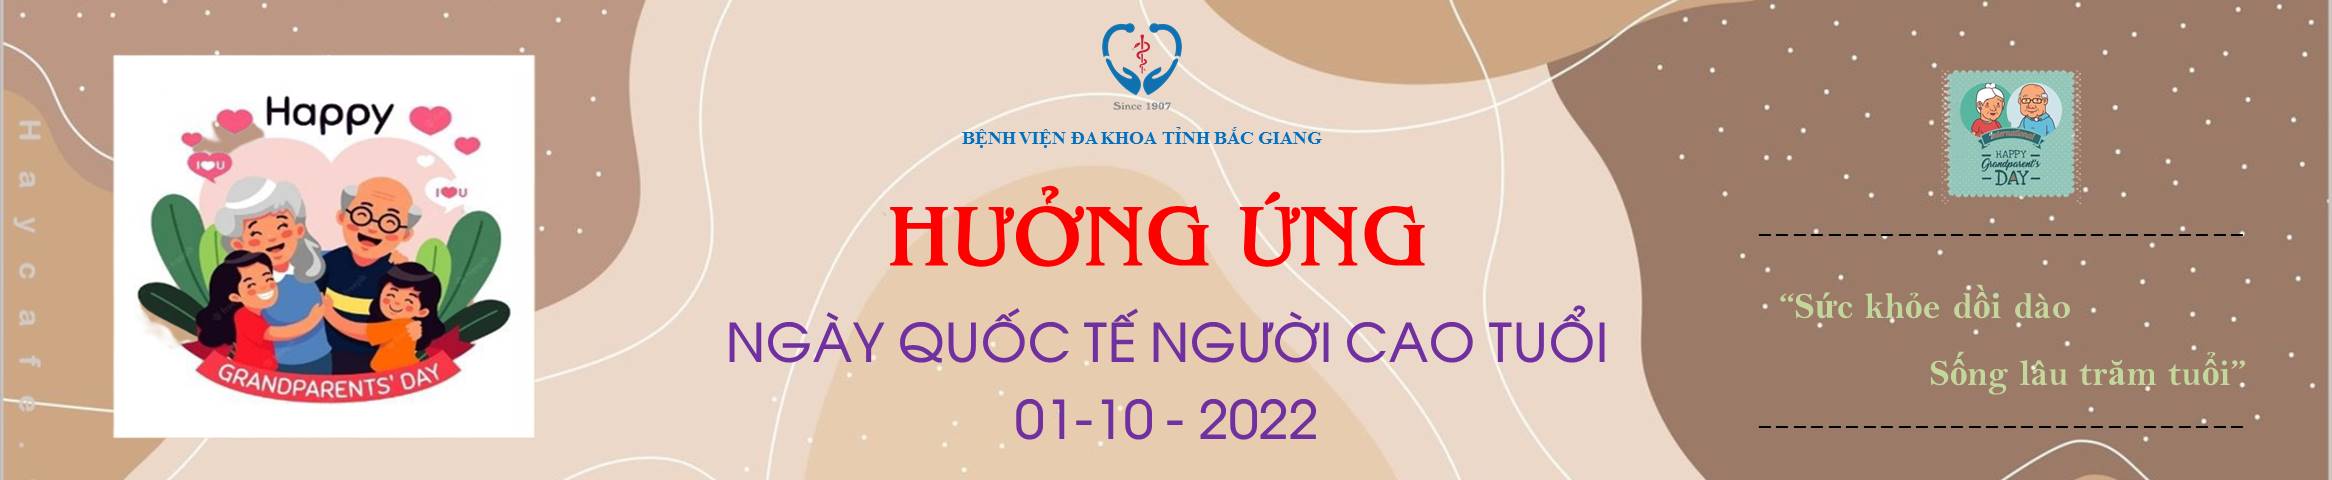 HUONG_UNG_QUOC_TE_NGUOI_CAO_TUOI_b198540aa2